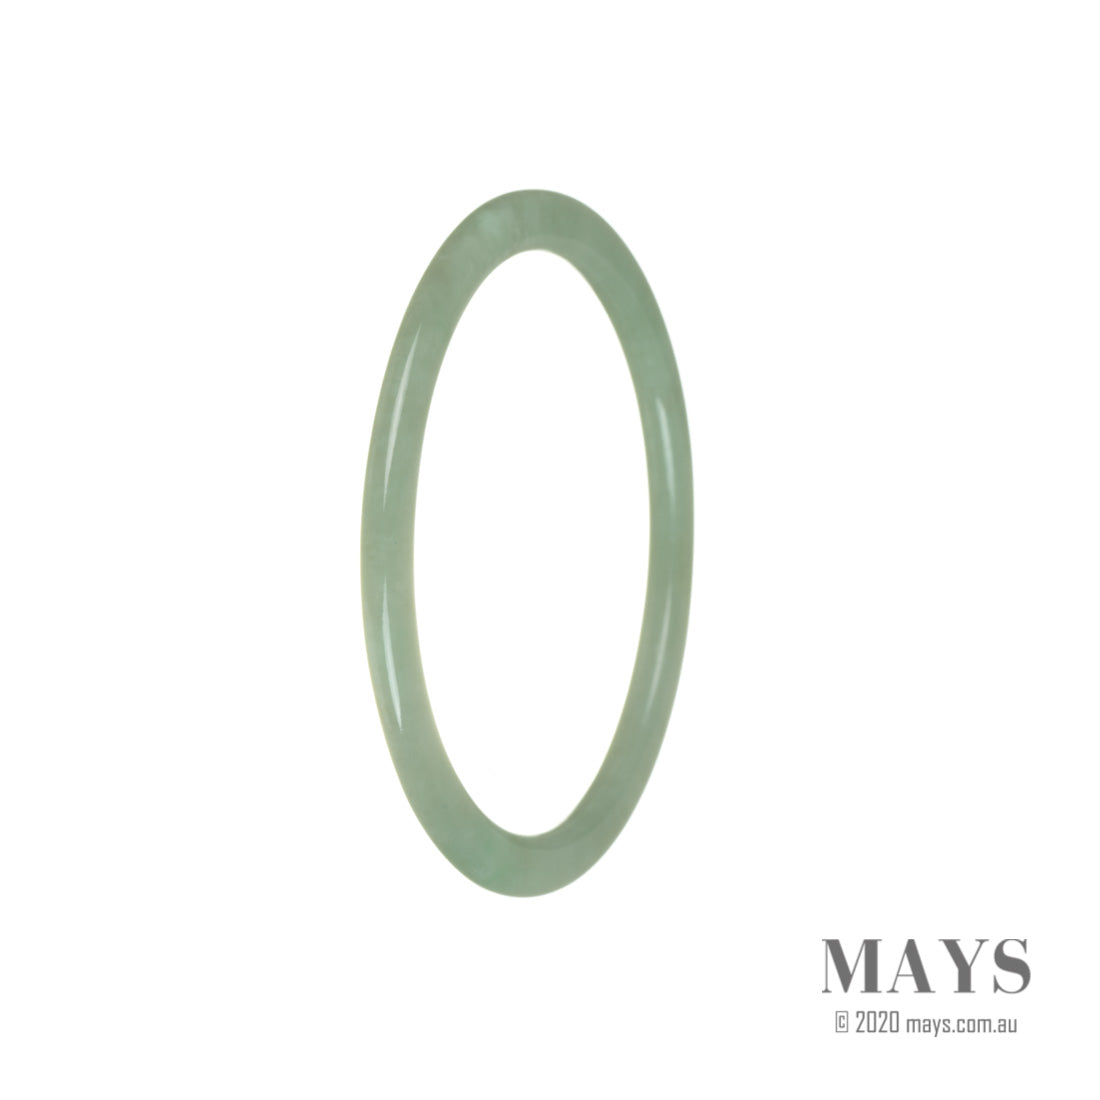 A thin, 59mm authentic Grade A Green Burmese Jade bangle from MAYS™, showcasing the stunning natural beauty of Burmese Jade.